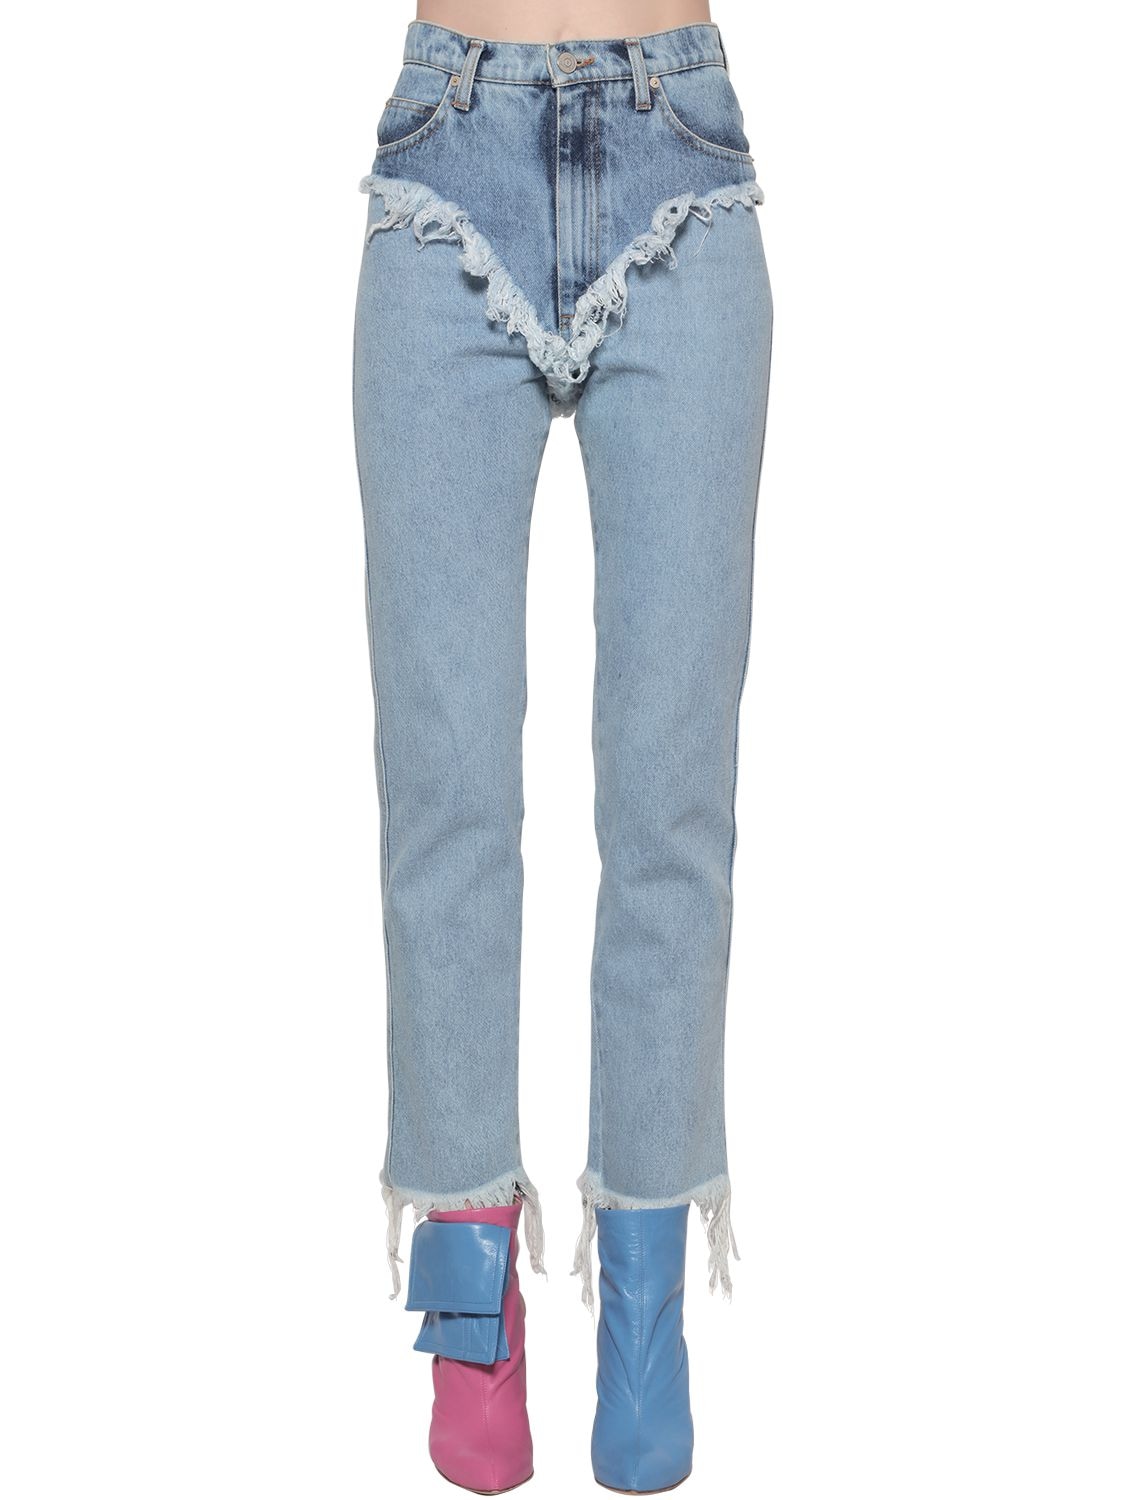 Natasha Zinko Doubled Cotton Denim Jeans In Light Blue